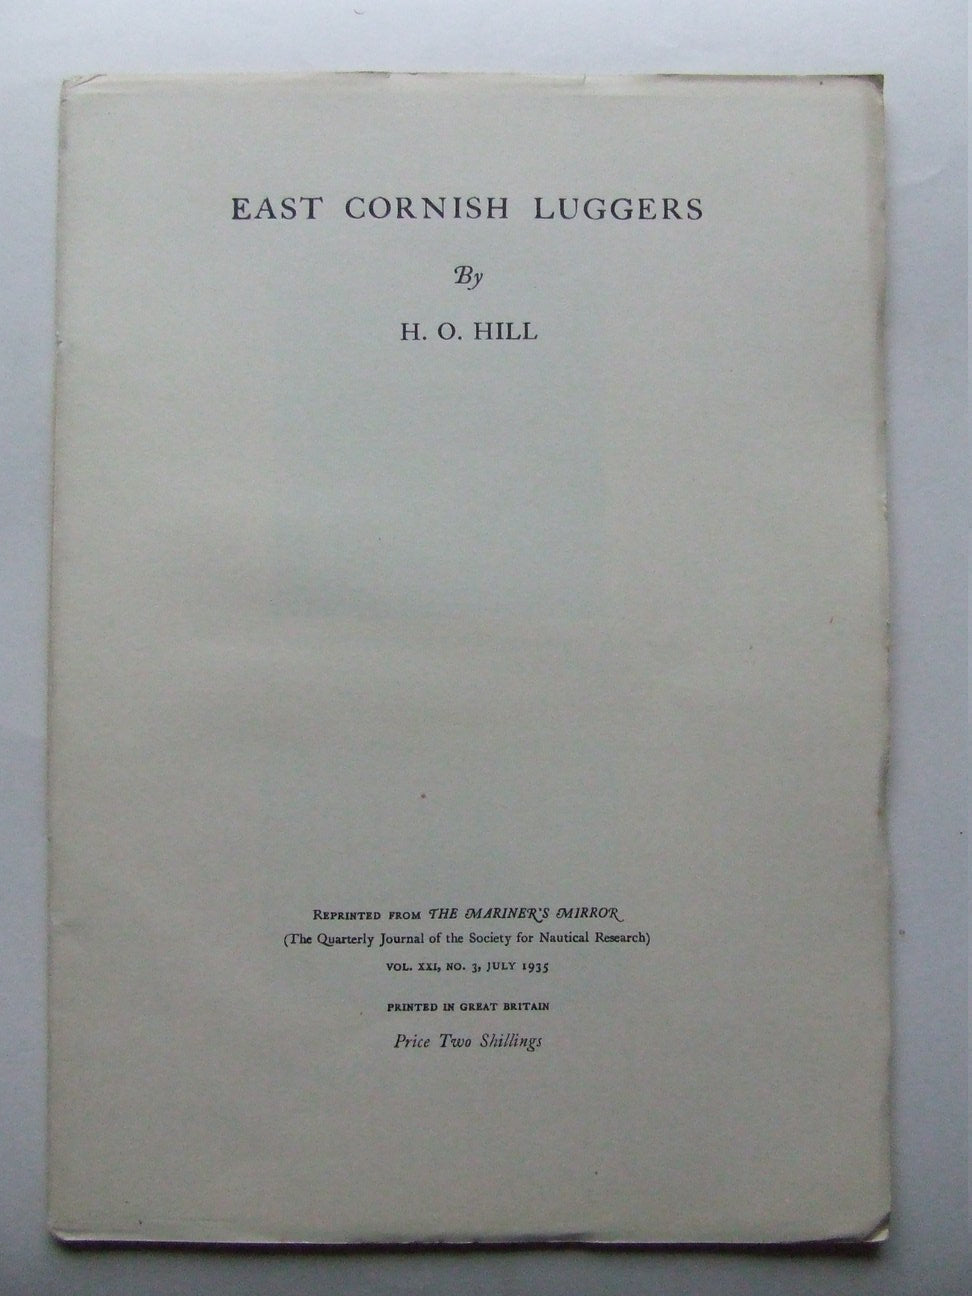 East Cornish Luggers